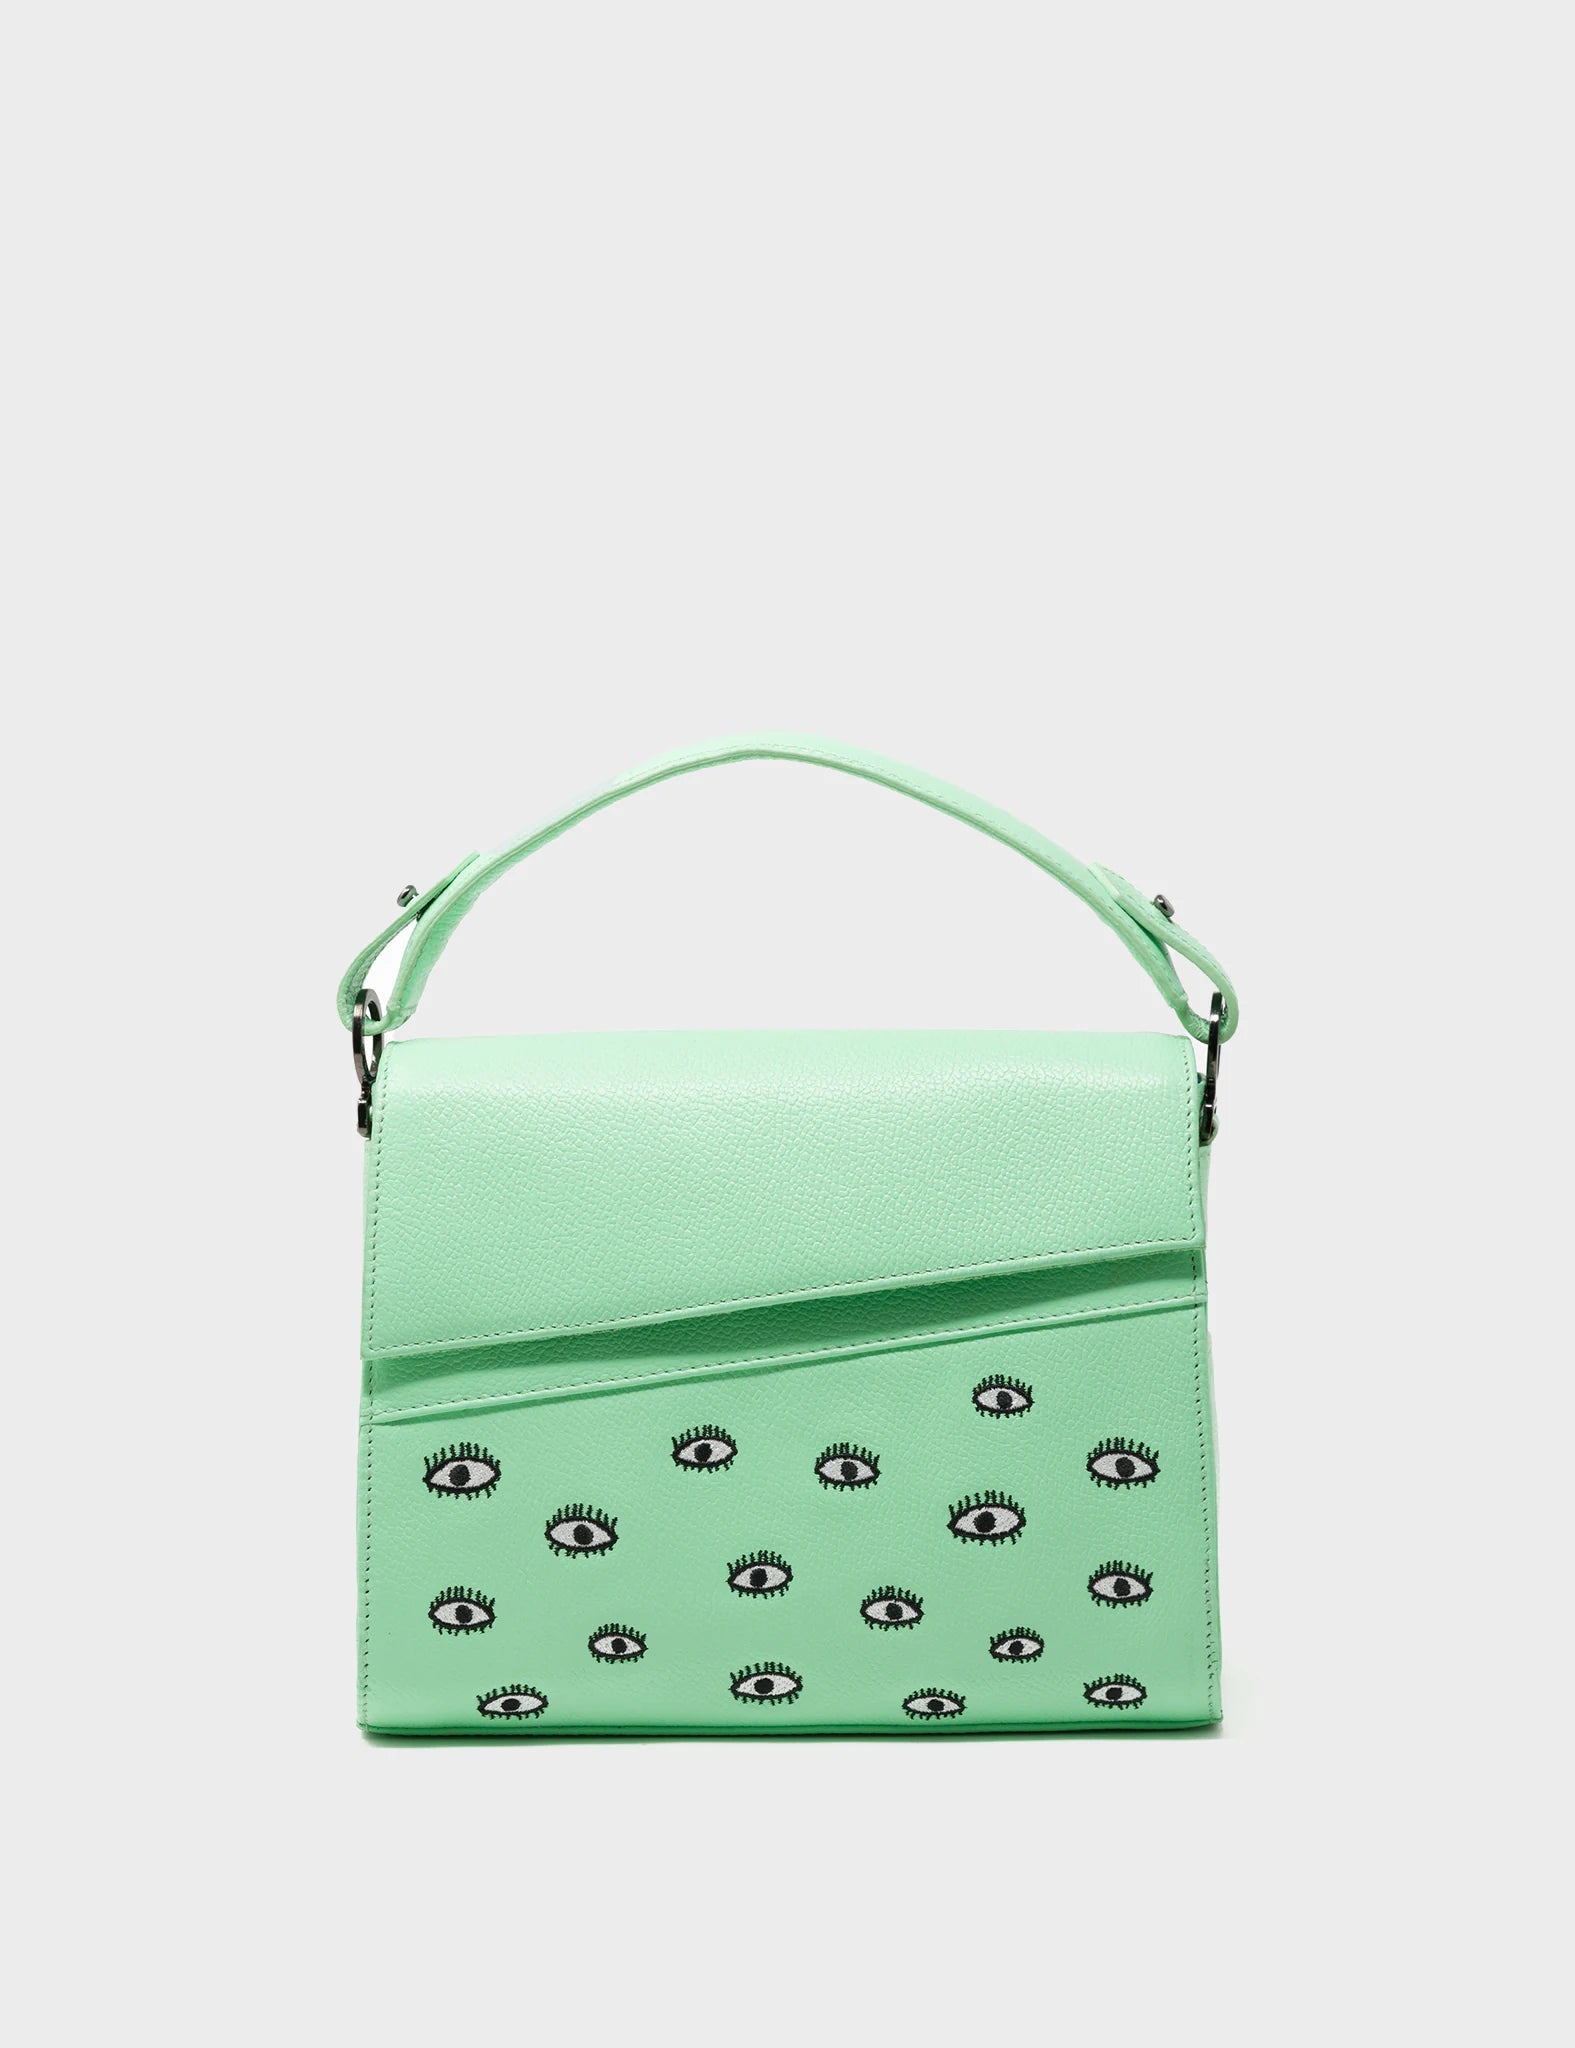 Mini Crossbody Handbag Ash Green Leather Eyes Embroidery  - Front